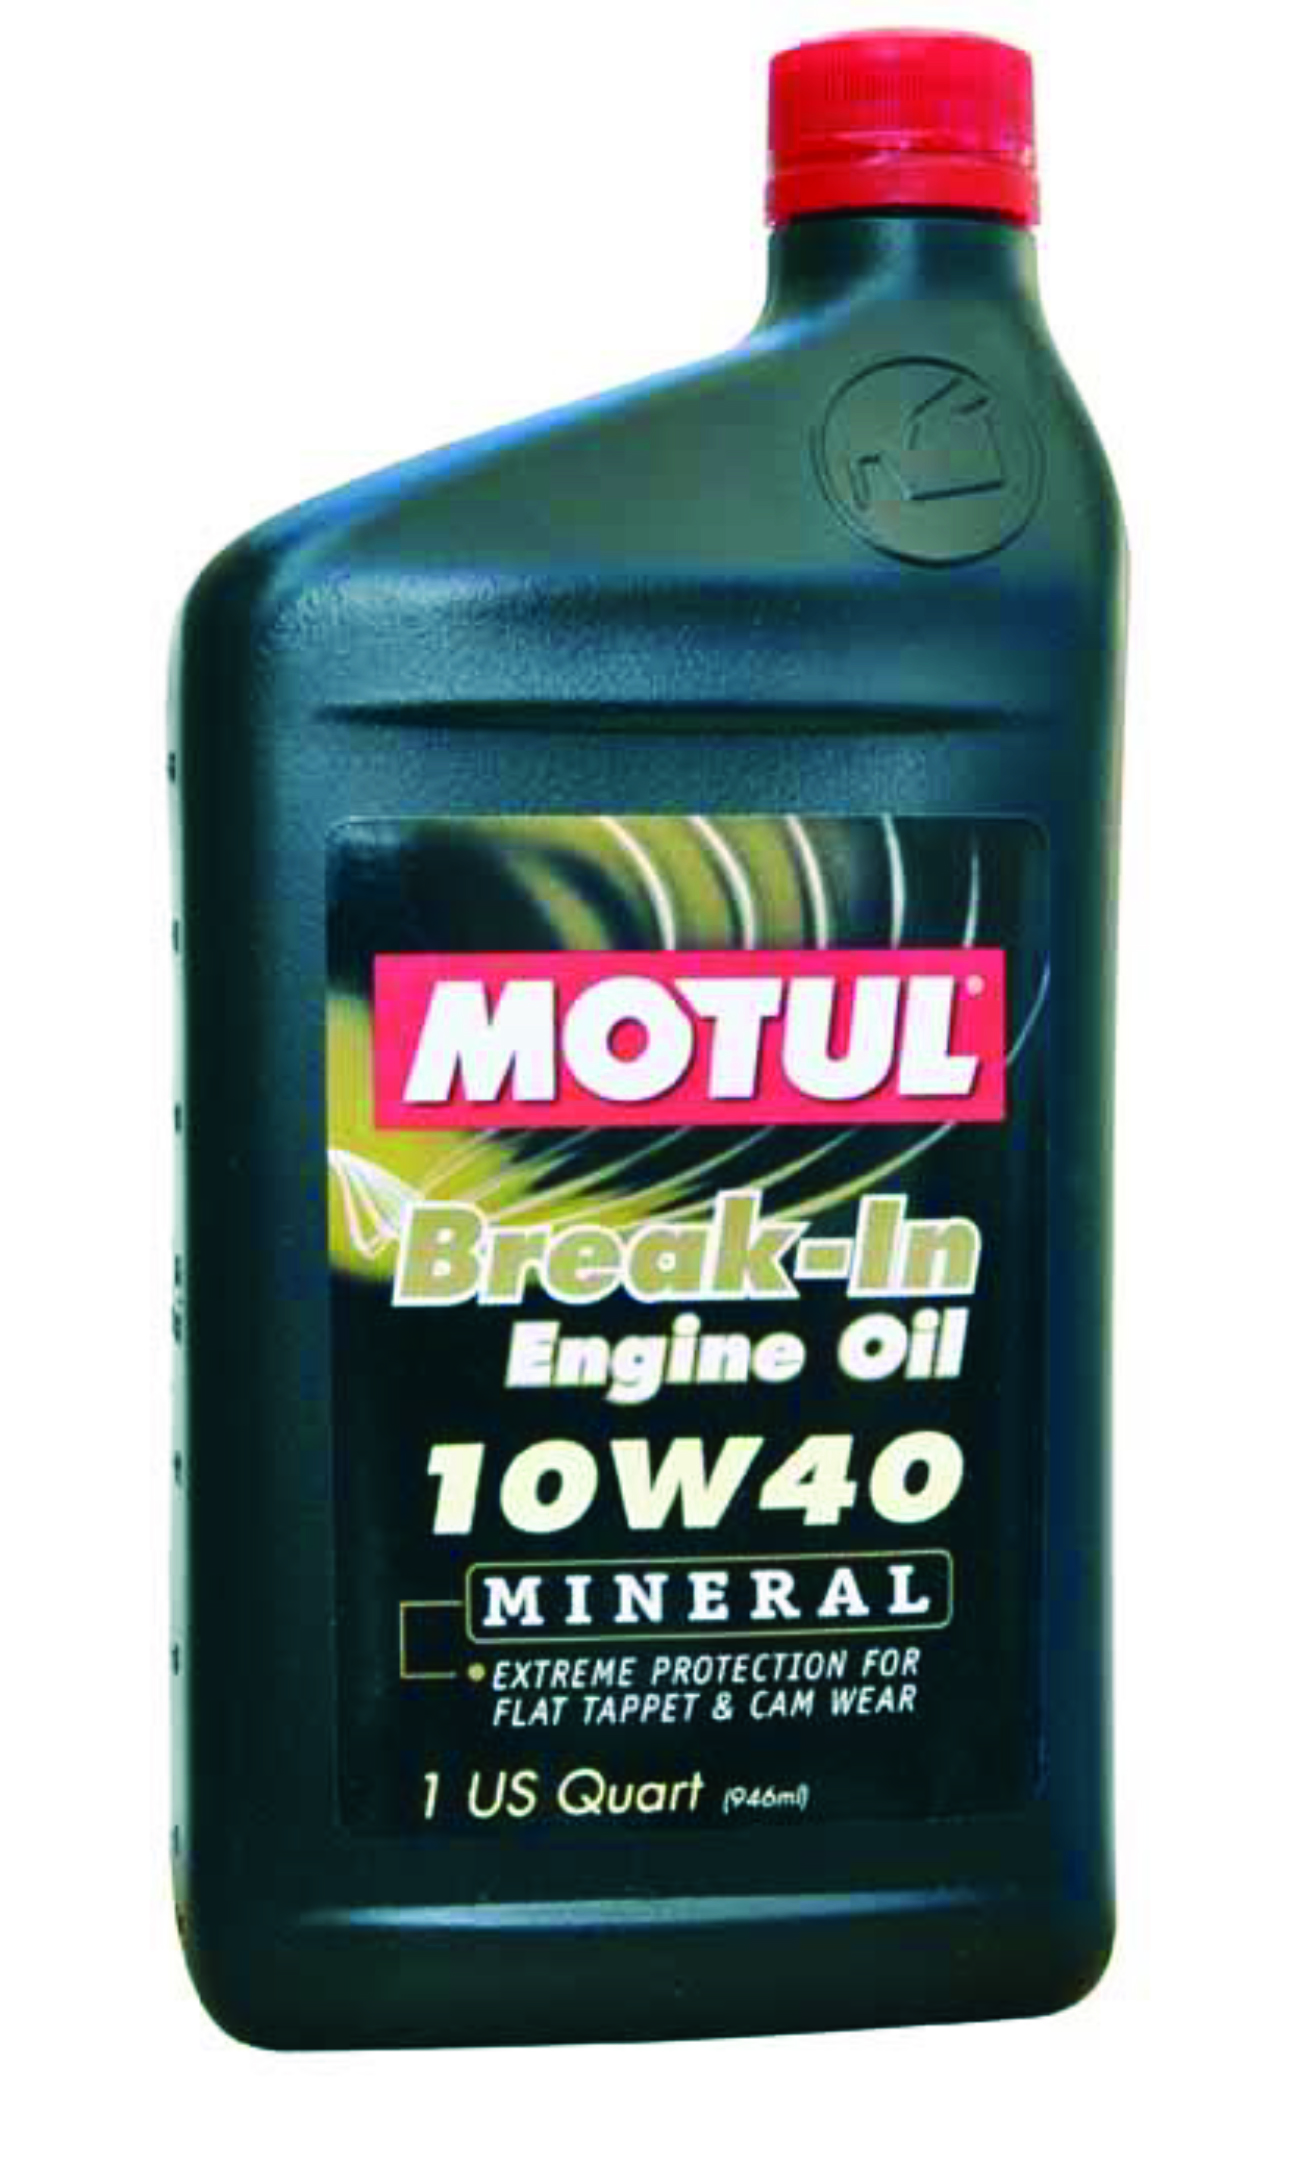 MOTUL BREAK-IN OIL 10W40 (MINERAL) Classic Engine Oil